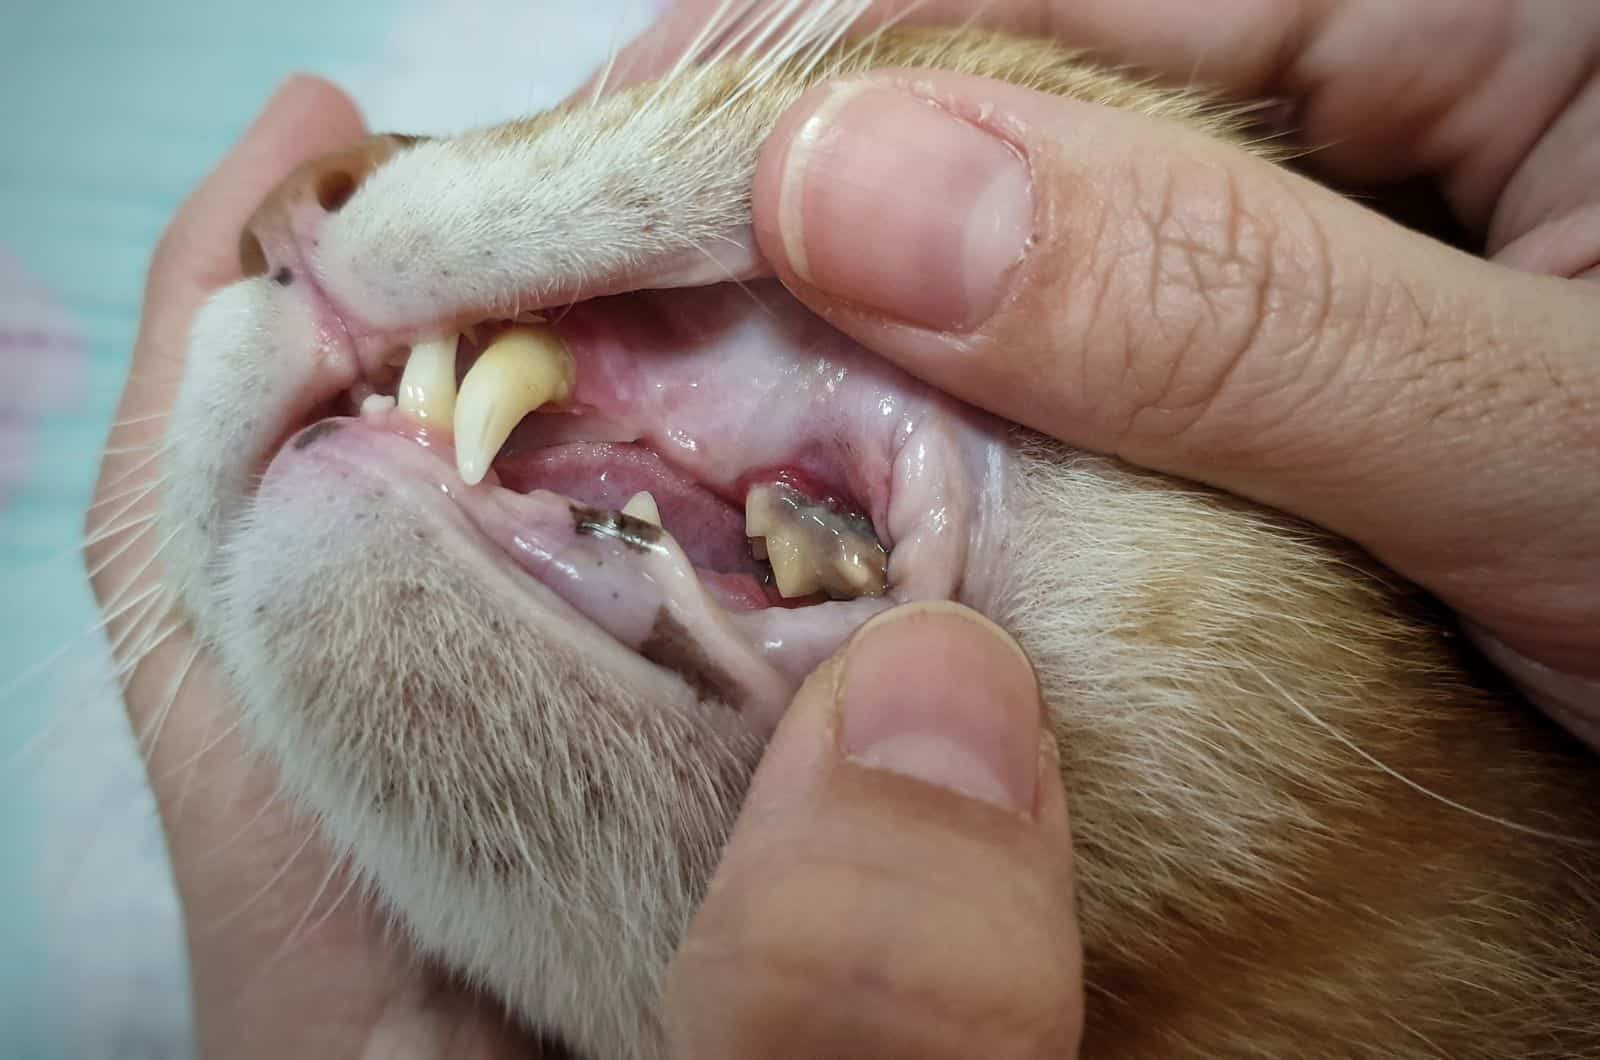 Plaque on cat's teeth